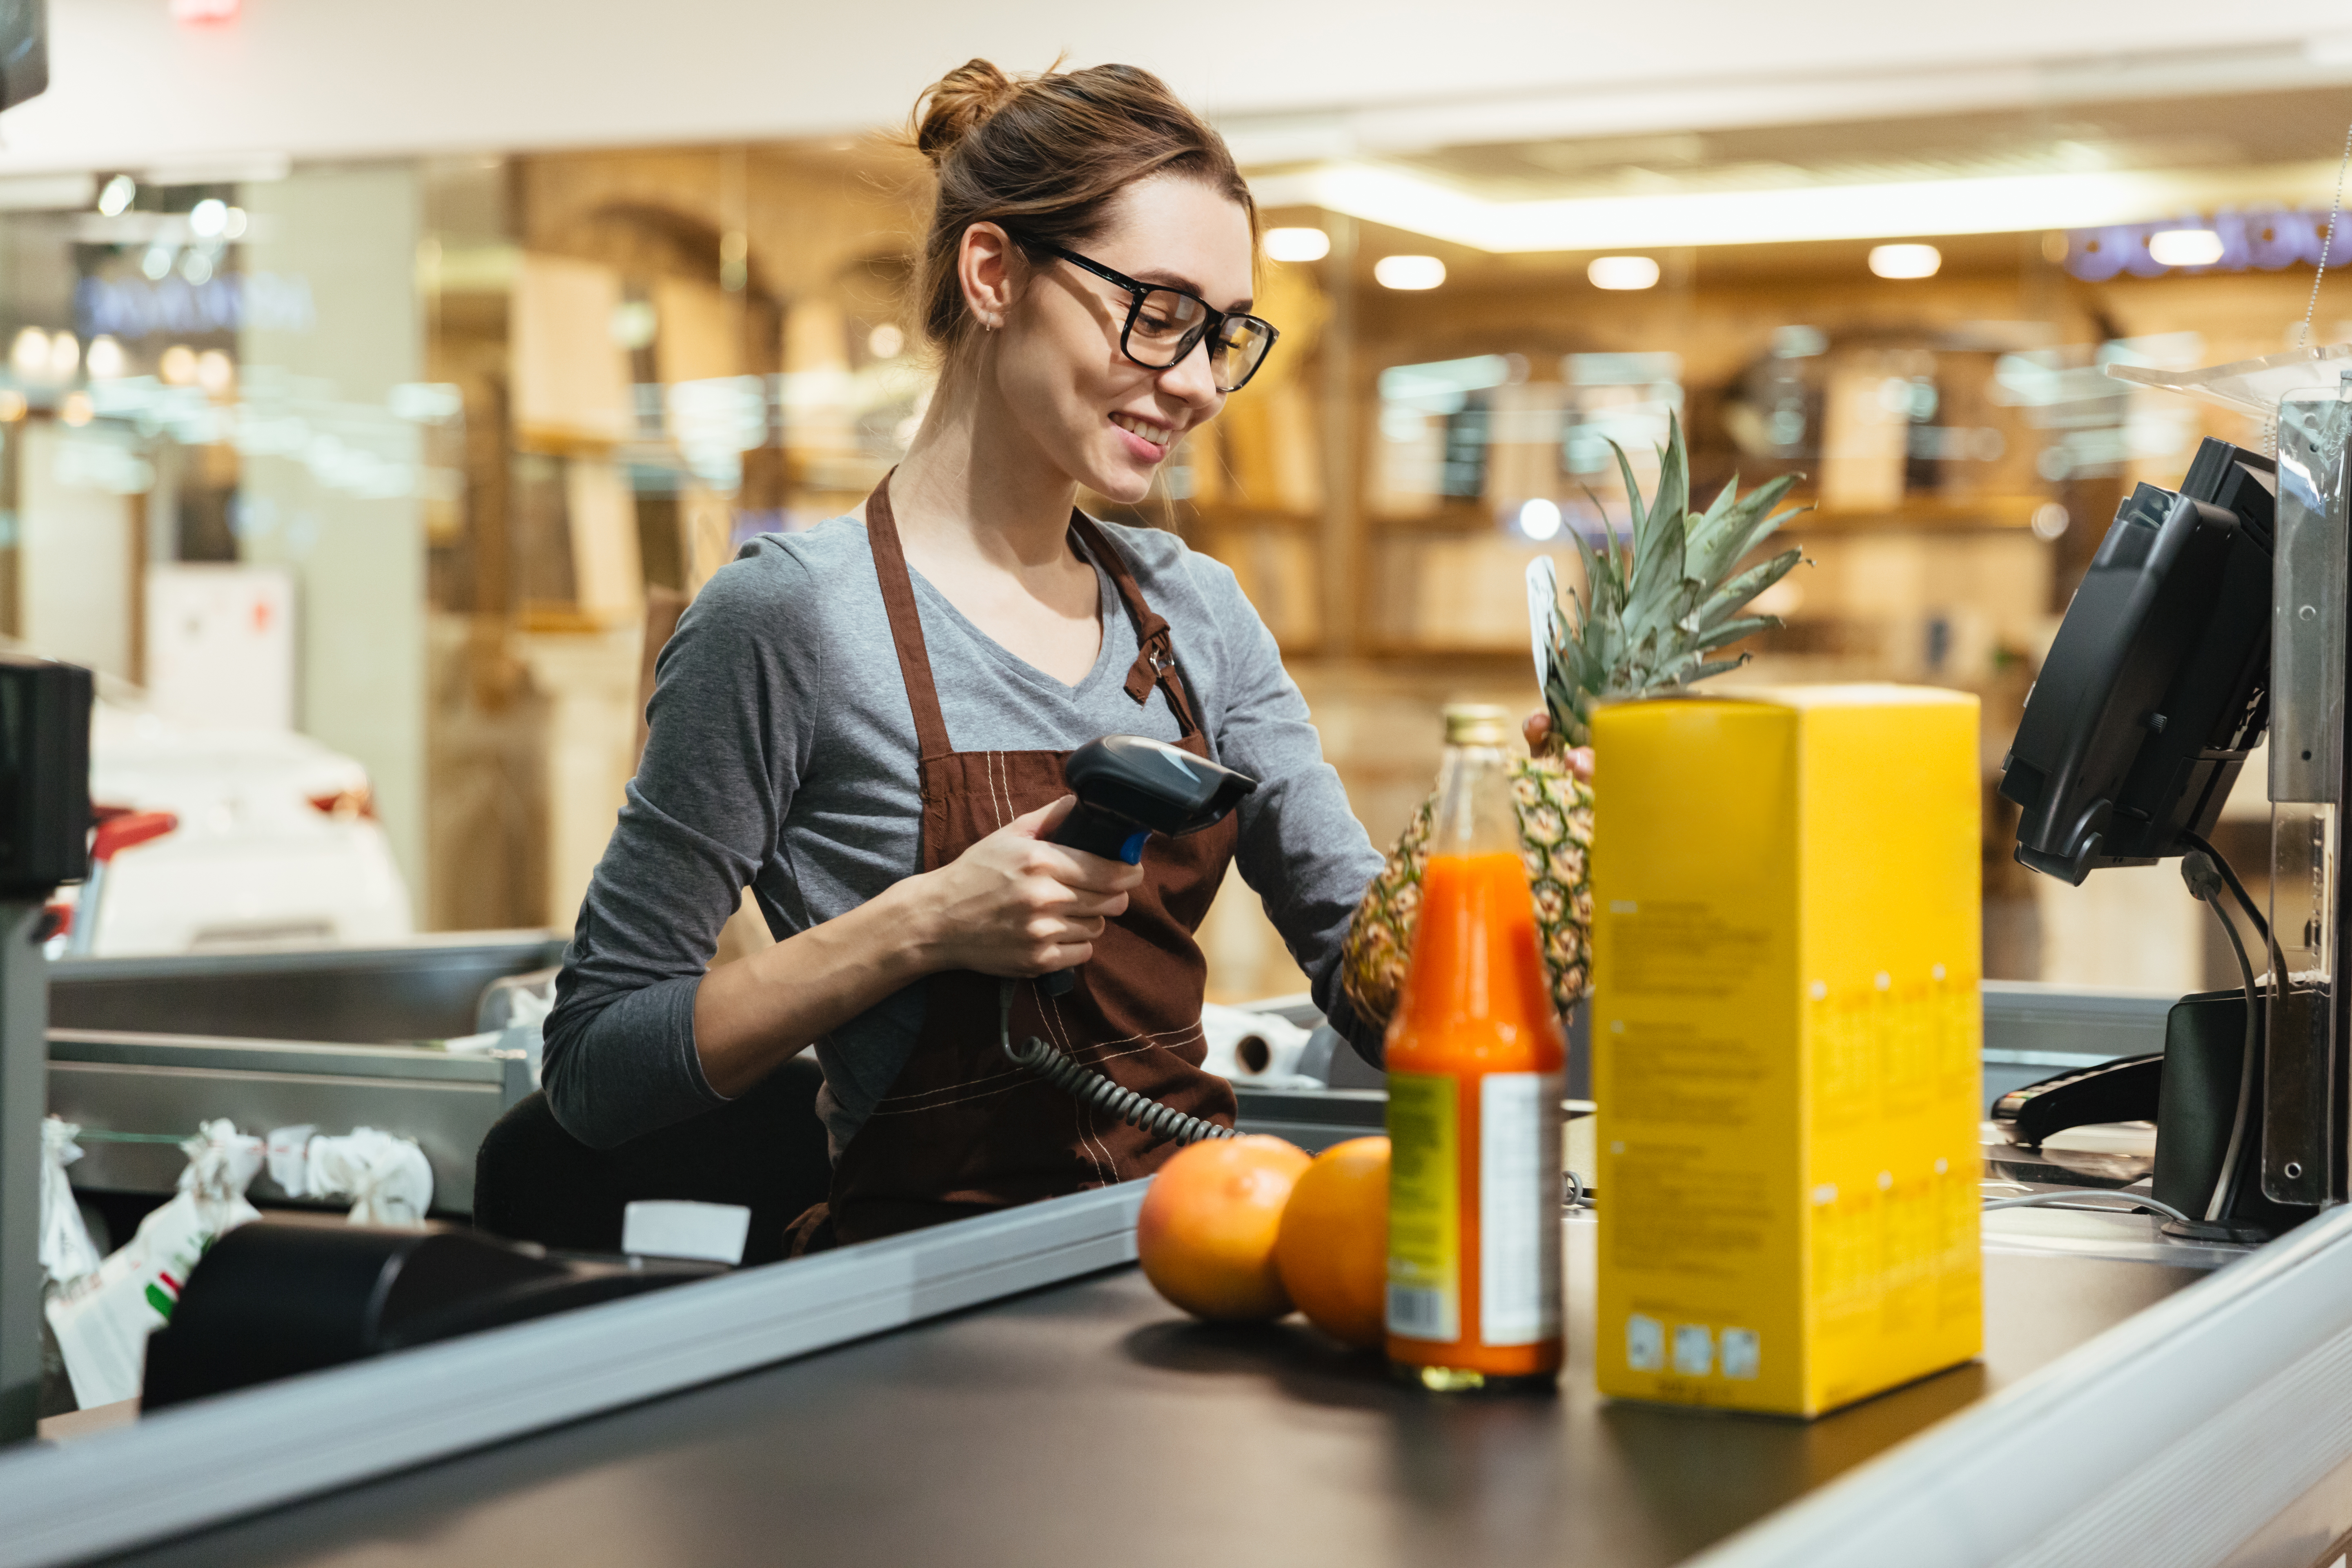 A cashier working at a supermarket. | Source: Shutterstock